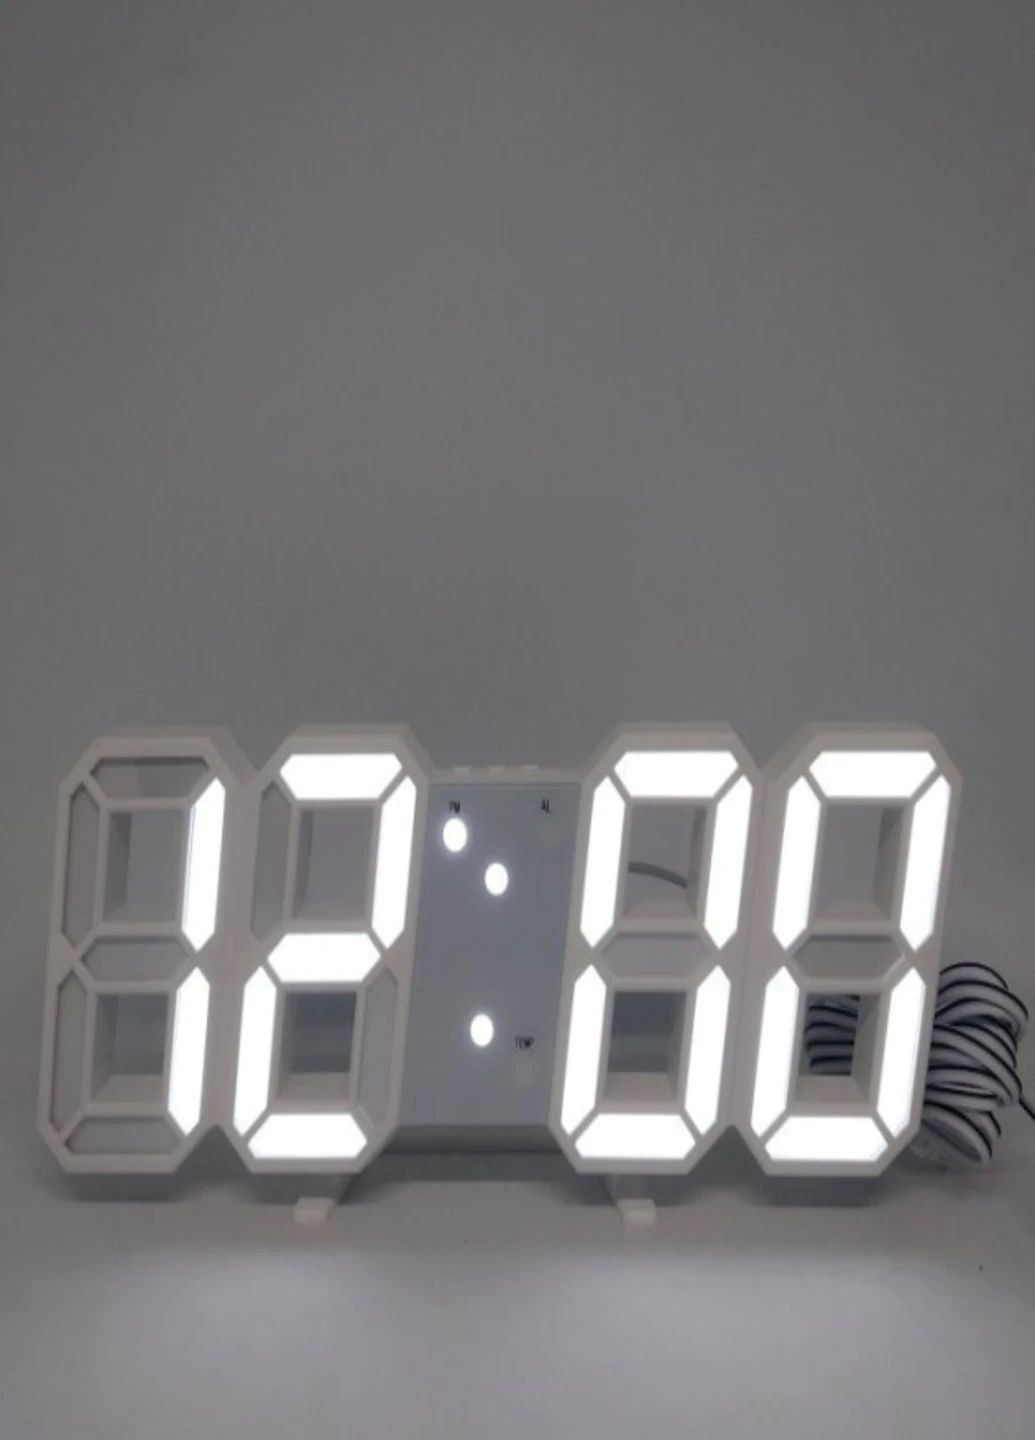 Настольные часы LY 1089 с белой подсветкой, белые. VST (278646417)